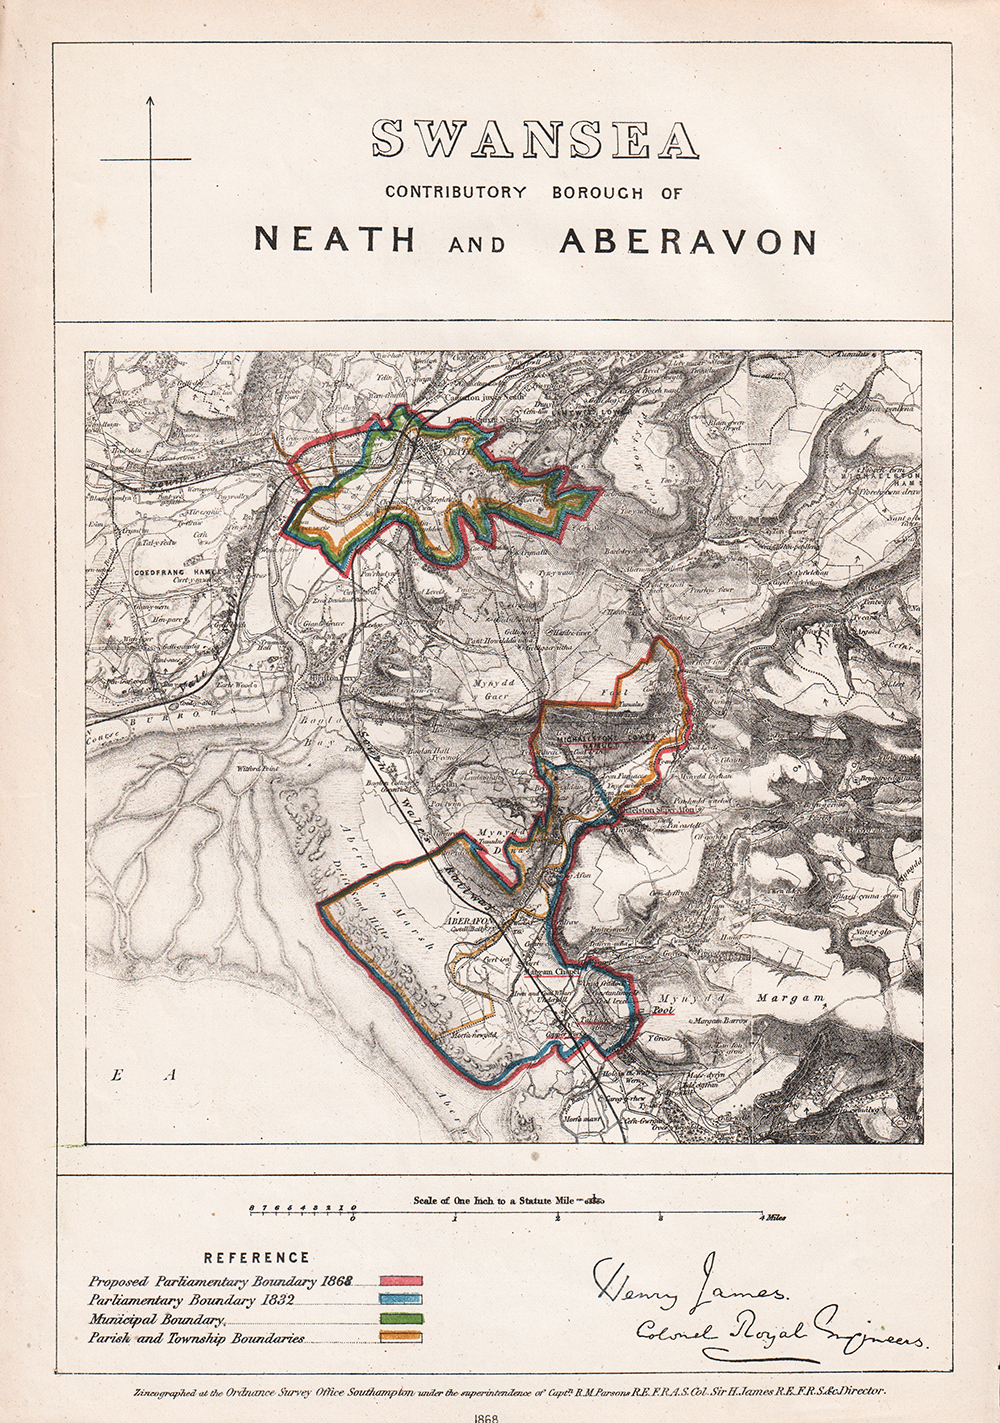 Contibutory Borough of Neath and Aberavon